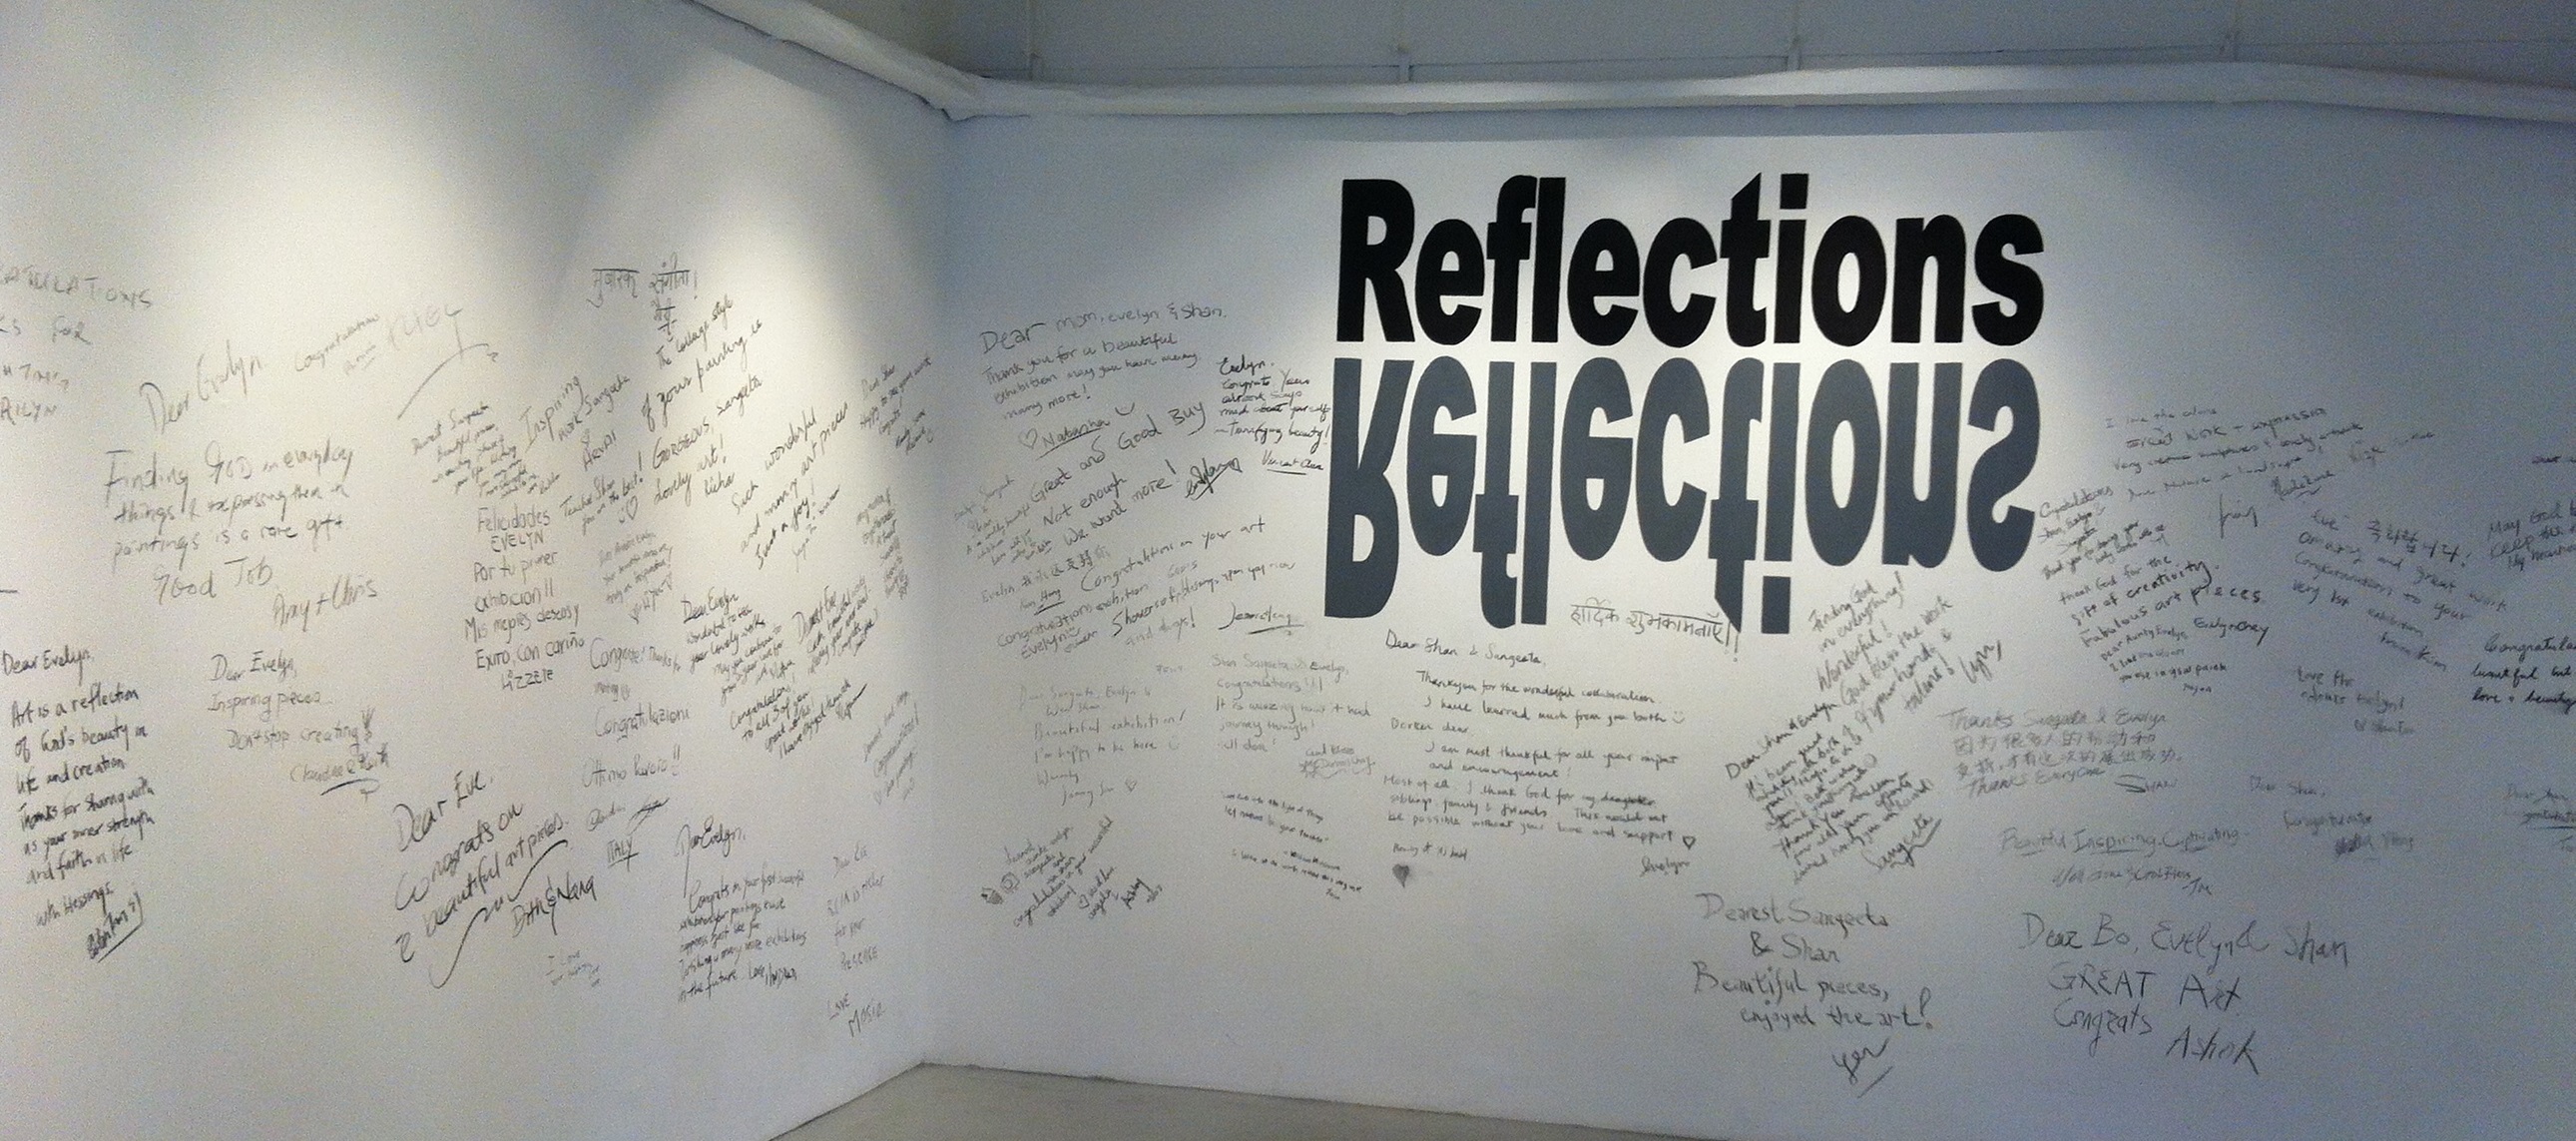 Reflections - exhibition, Singapore.